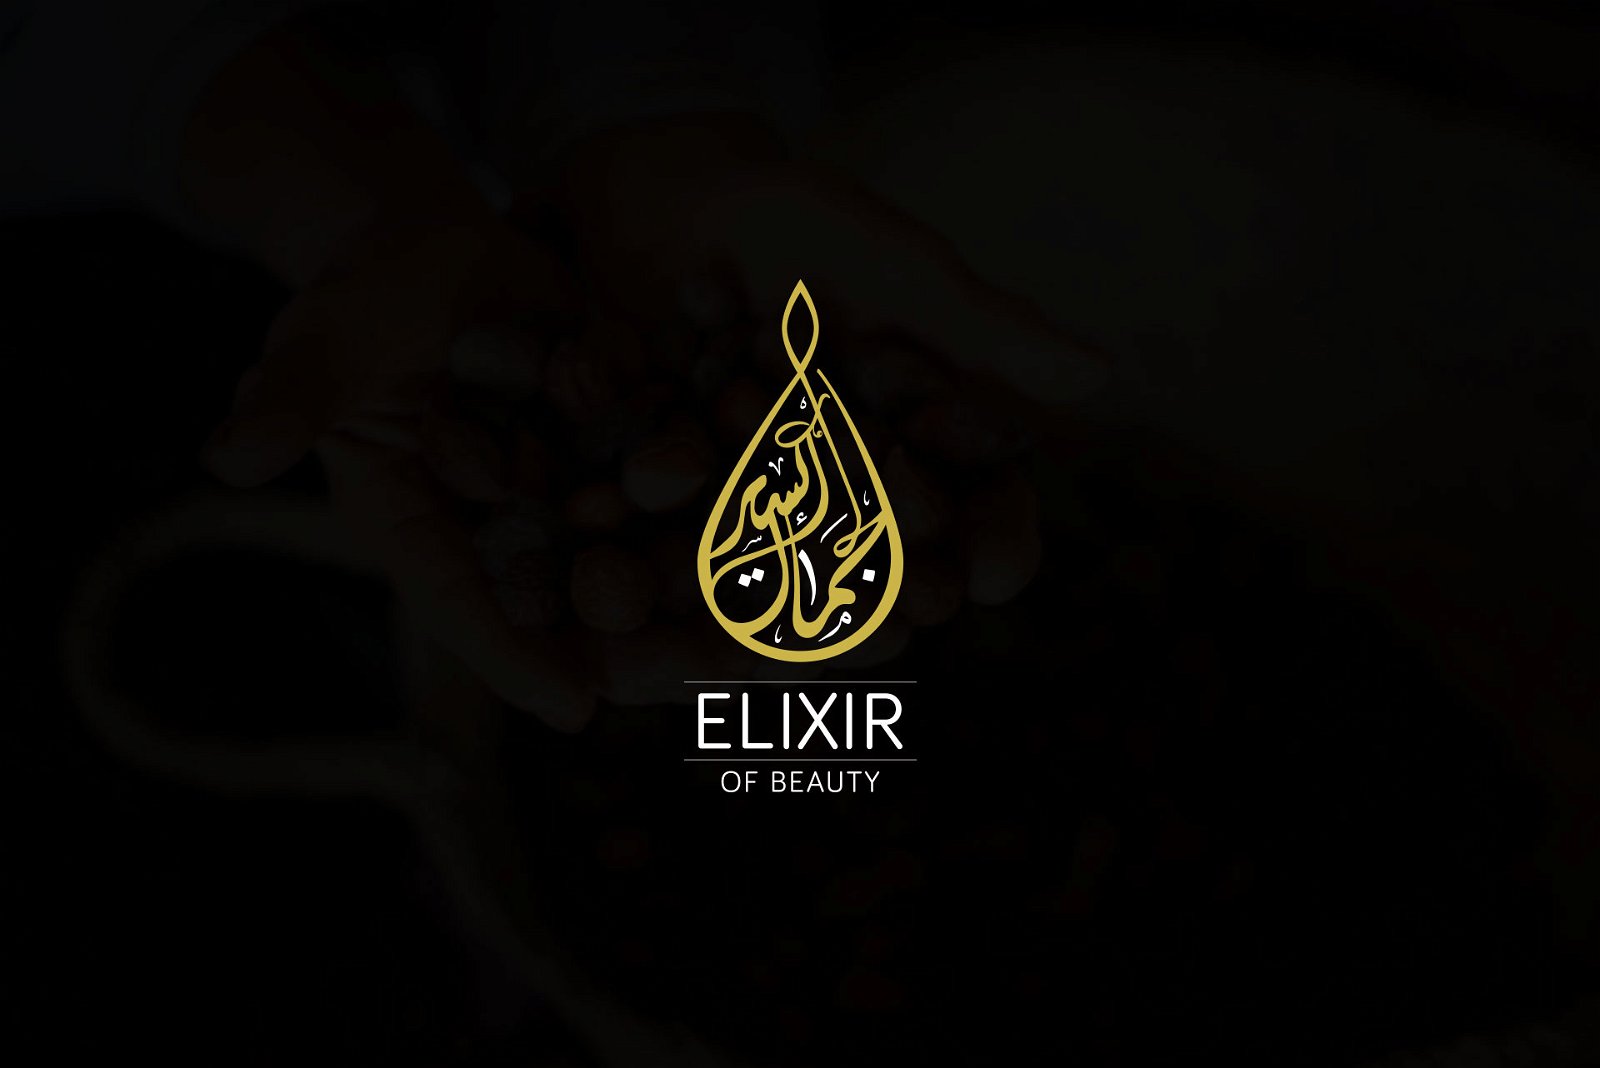 elixir of beauty